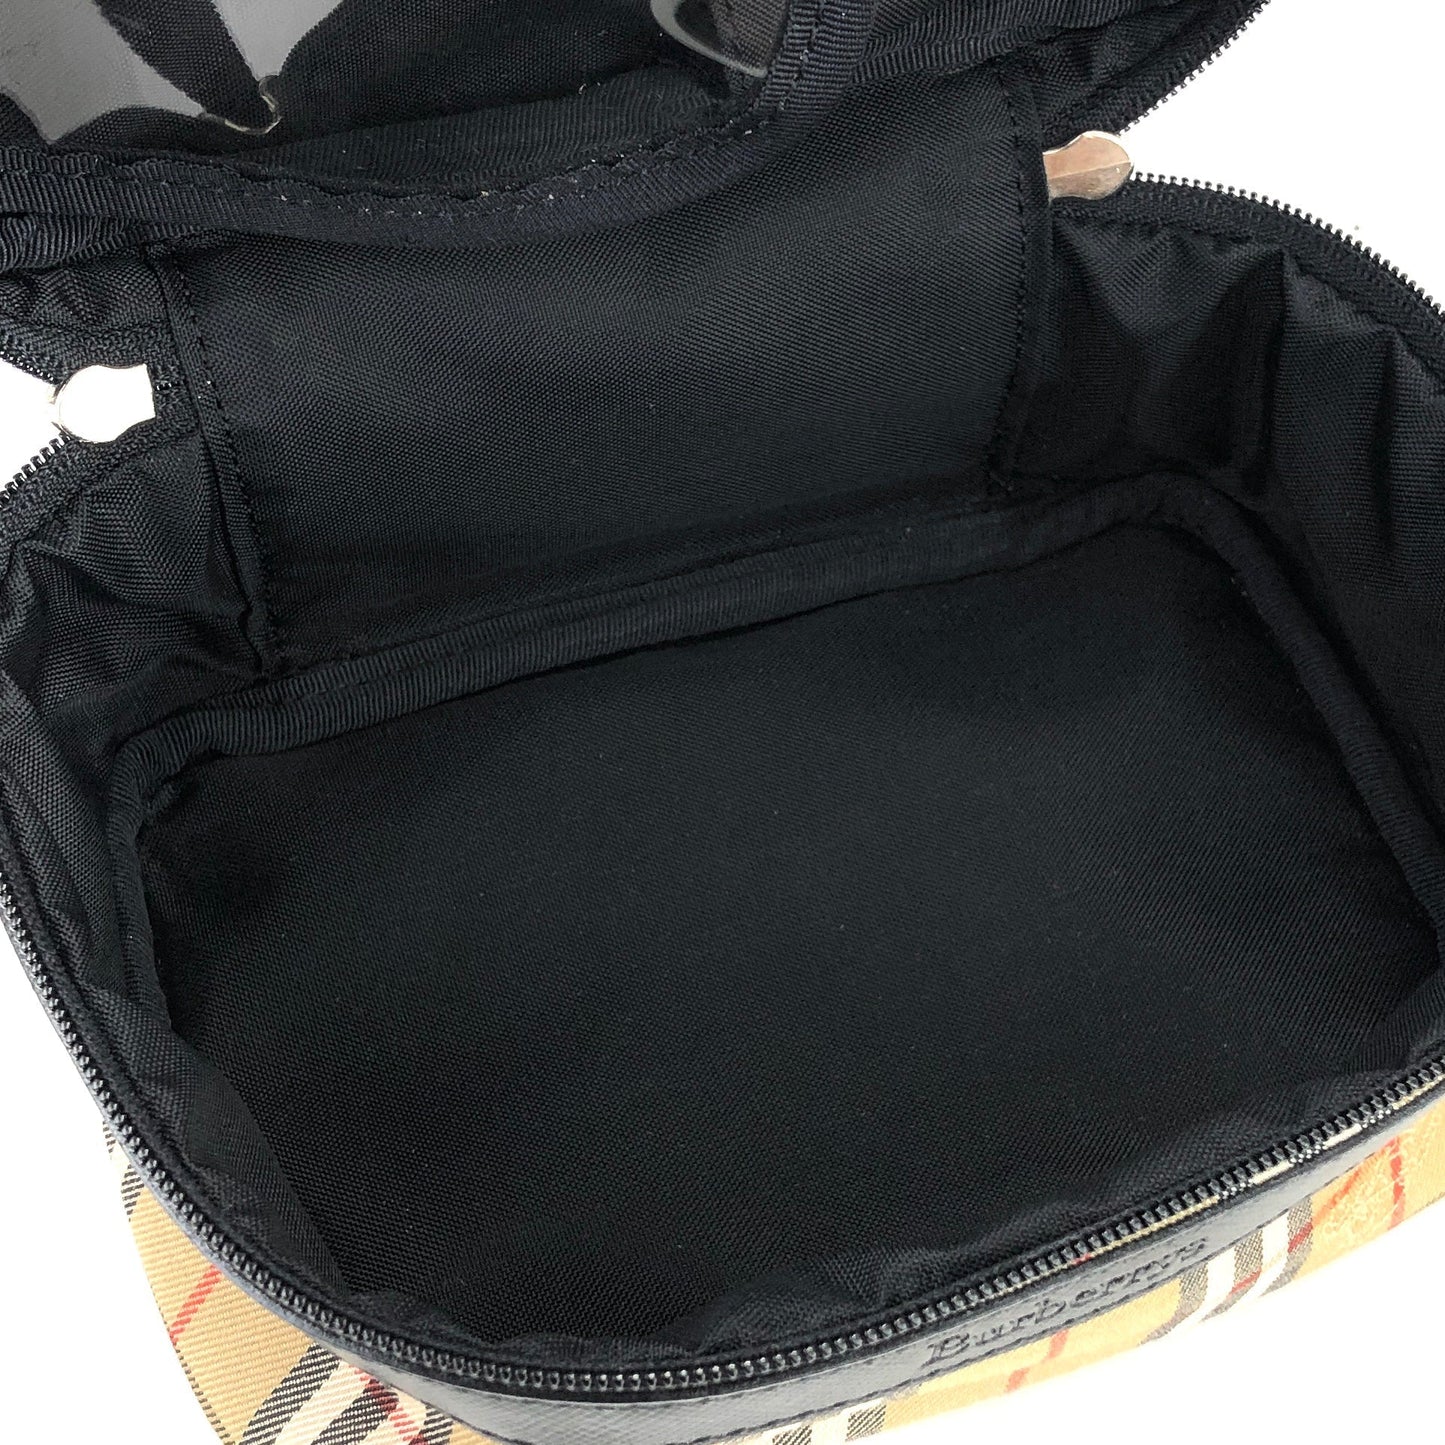 BURBERRY Classic check Fabric Small Vanity bag Cosmetic pouch Handbag Beige Vintage Old bpnn8u